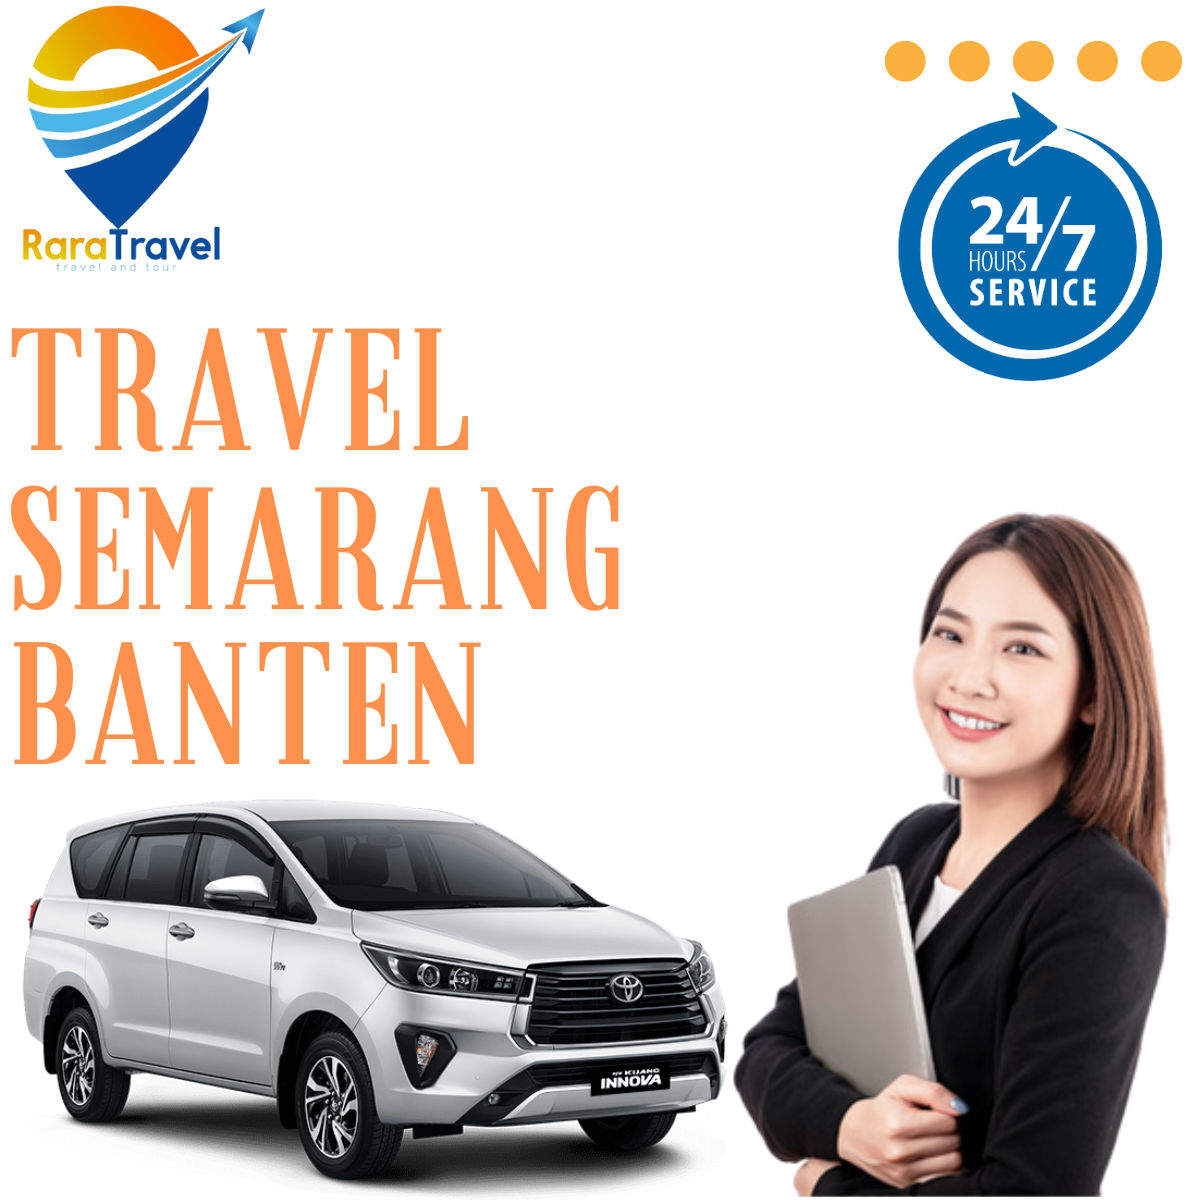 Travel Semarang Banten Hiace via TOLL Harga Tiket Murah